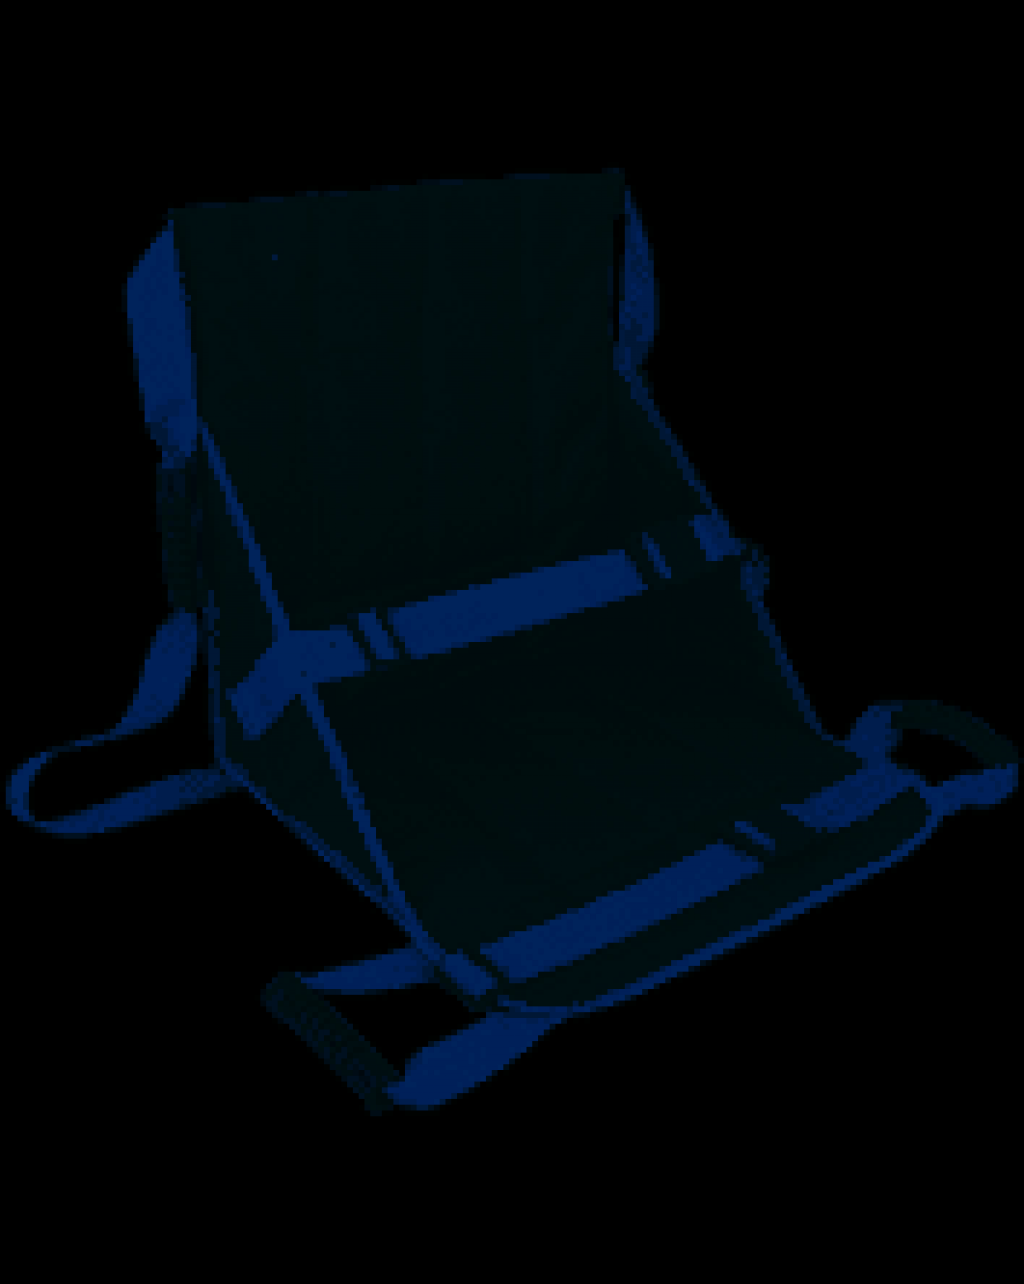 Amparar BH - Cadeira transferencia e mobilidade perfetto mobilittá - 